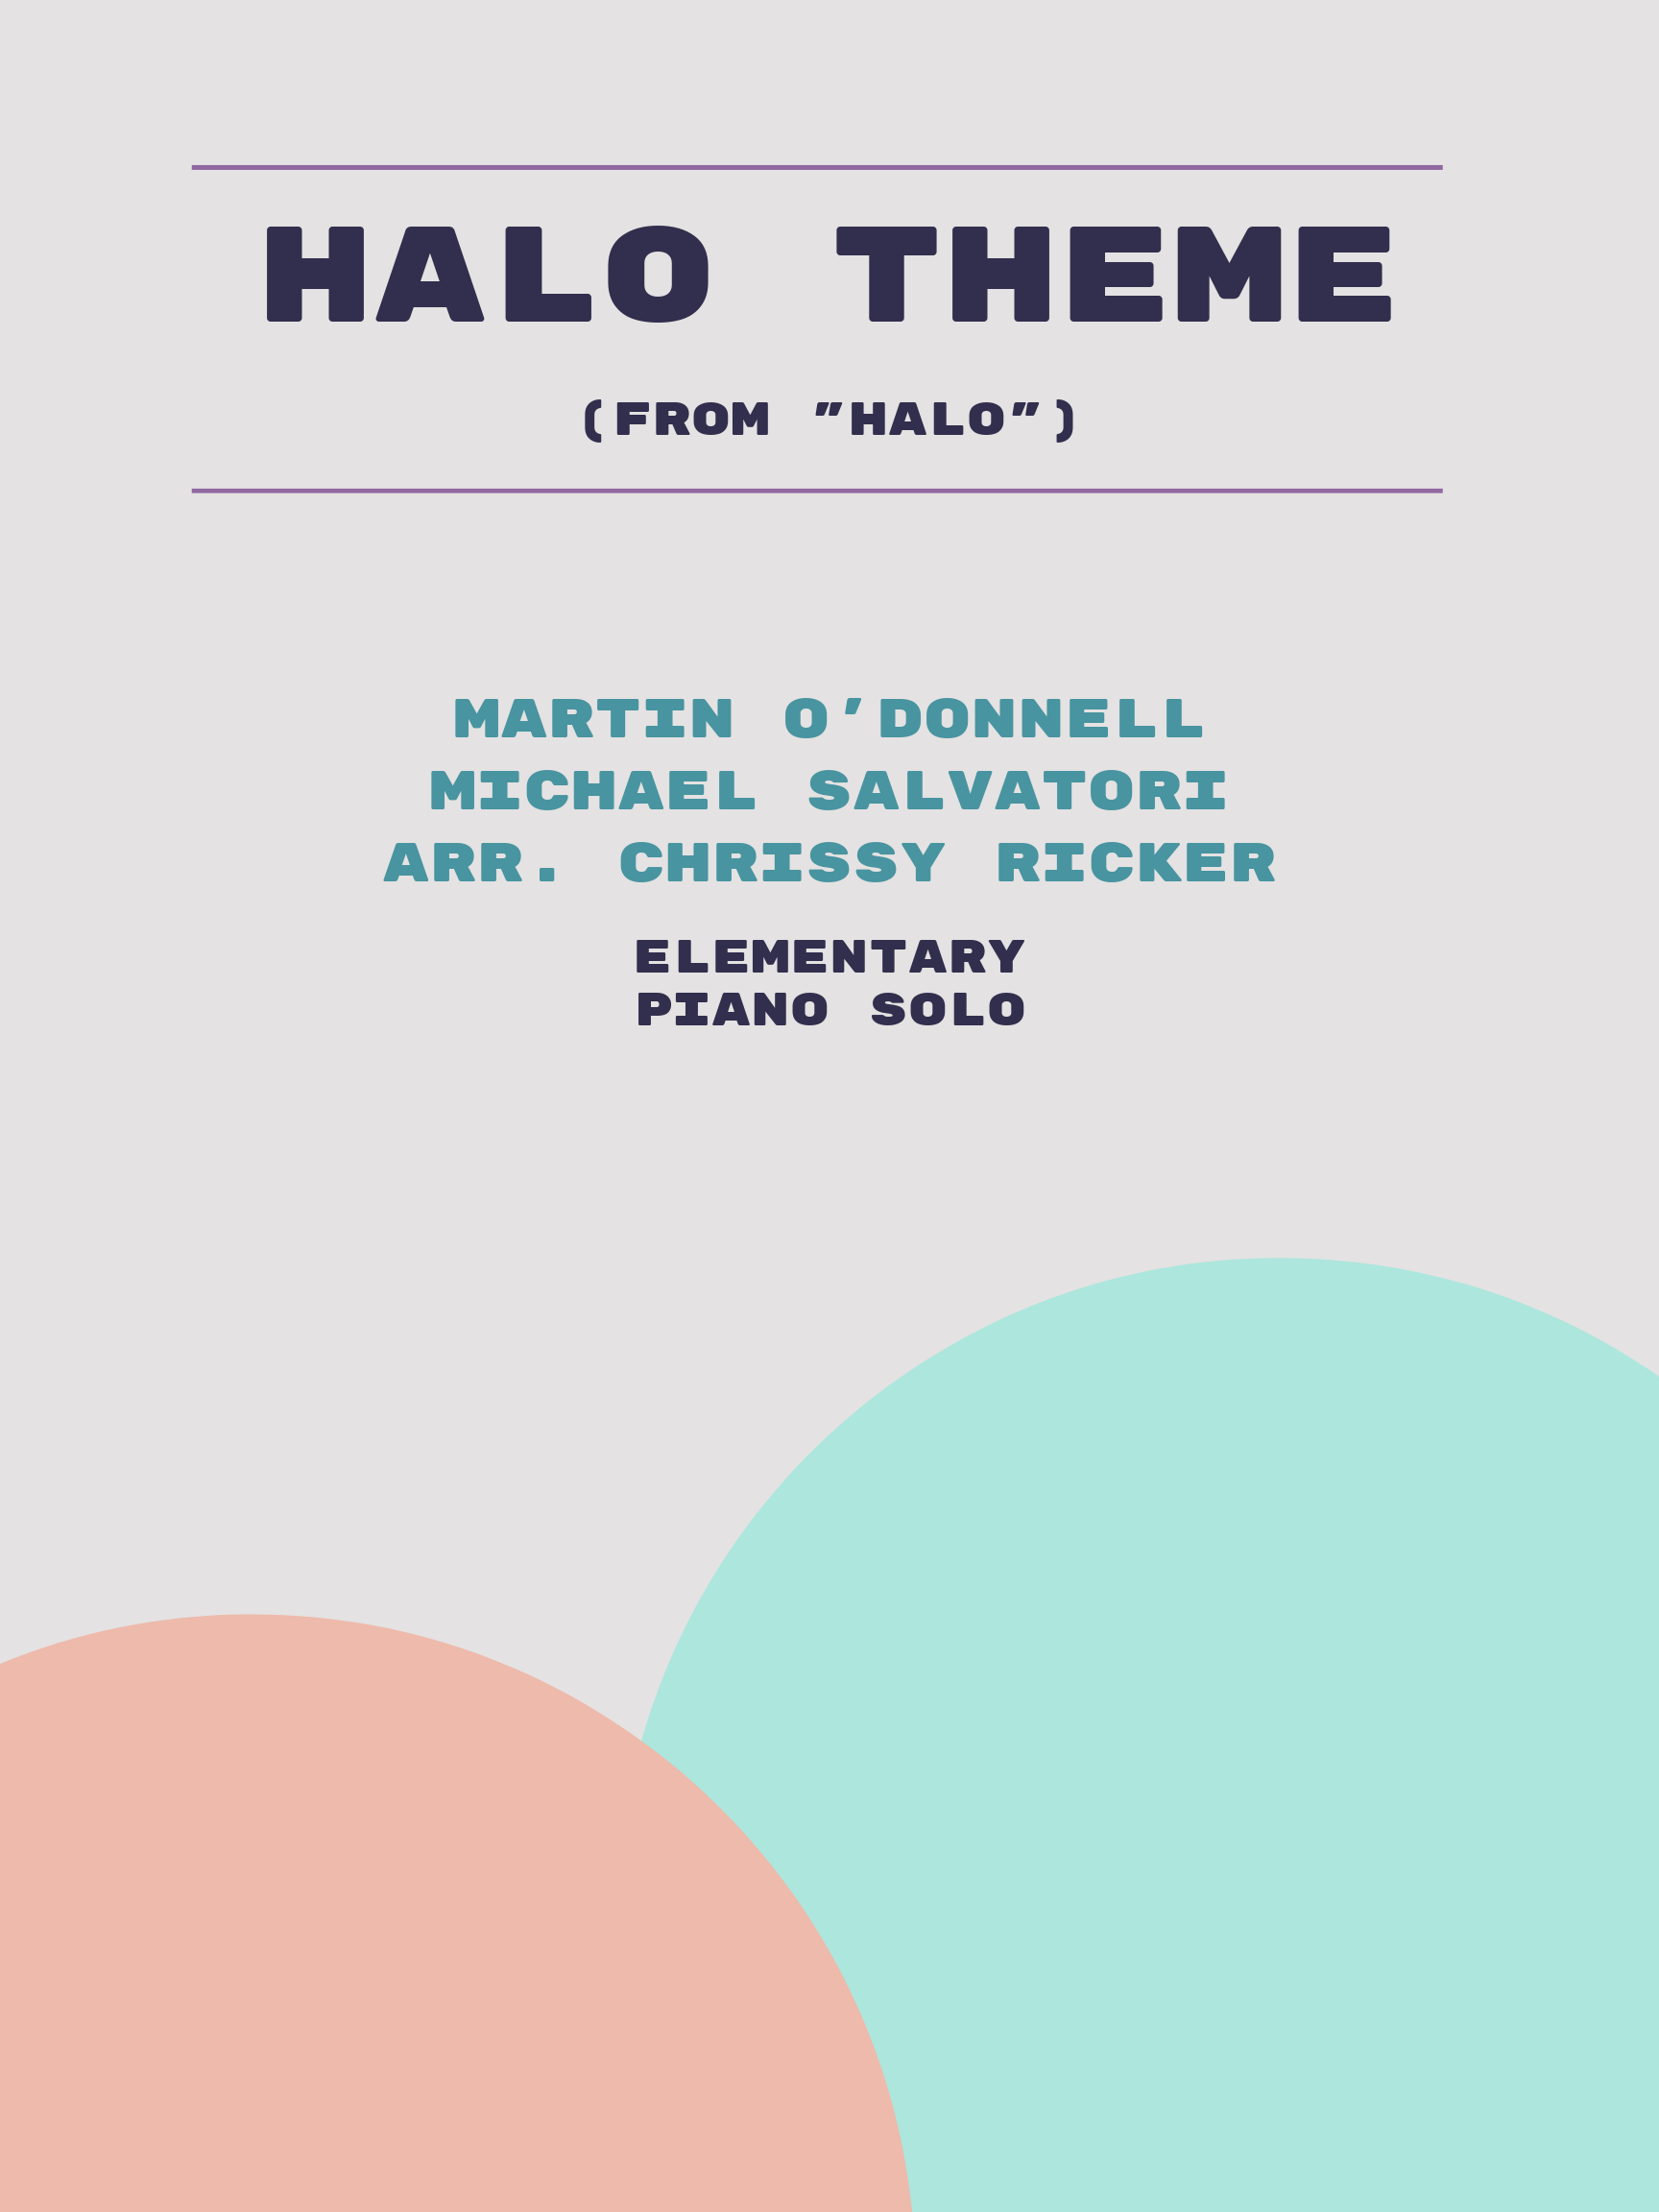 Halo Theme by Martin O'Donnell, Michael Salvatori